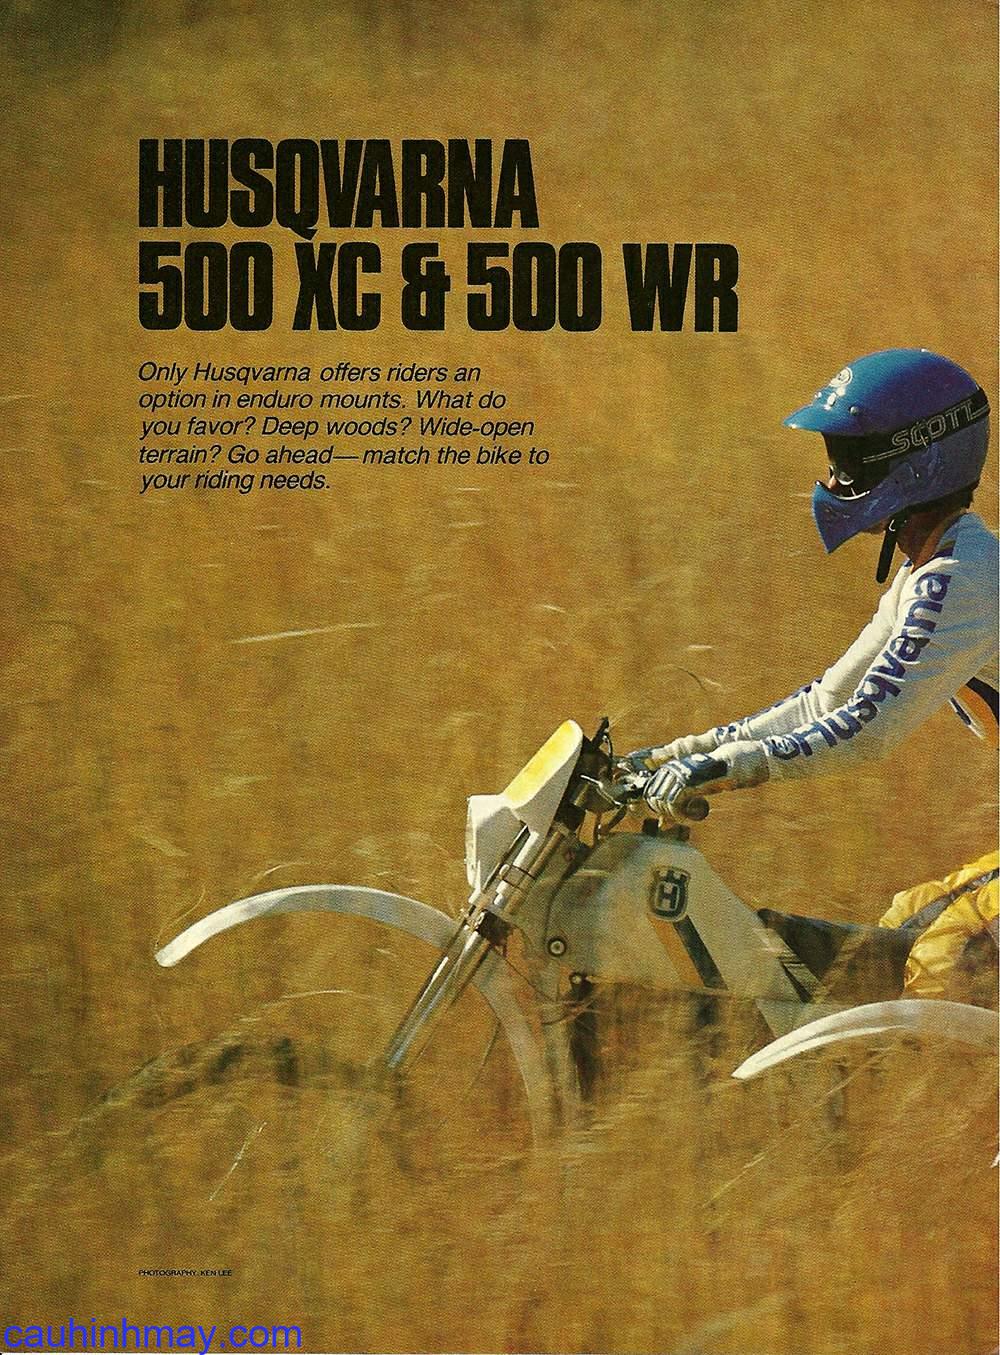 1984 HUSQVARNA 500WR - cauhinhmay.com